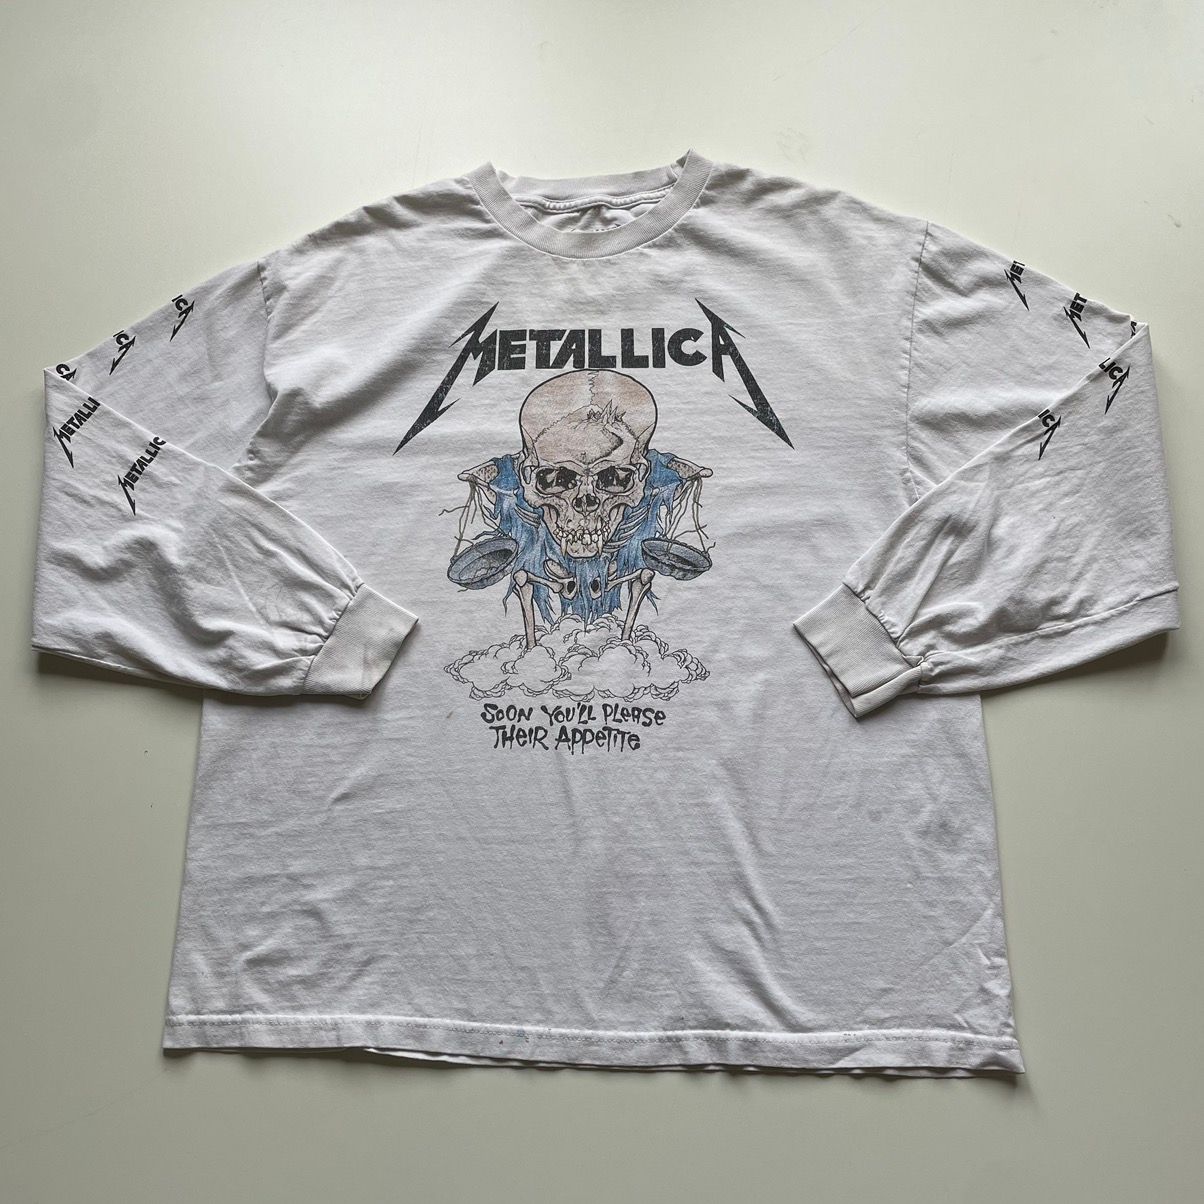 Vintage Vintage 2000s Metallica Graphic Long Sleeve Shirt XL Rare Size US XL / EU 56 / 4 - 1 Preview